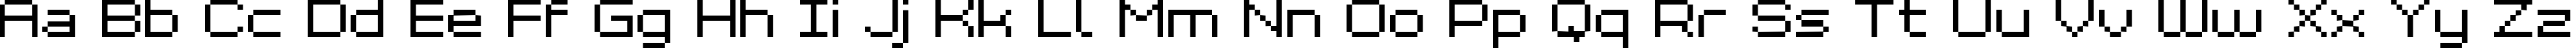 Пример написания английского алфавита шрифтом Grixel Kyrou 7 Wide